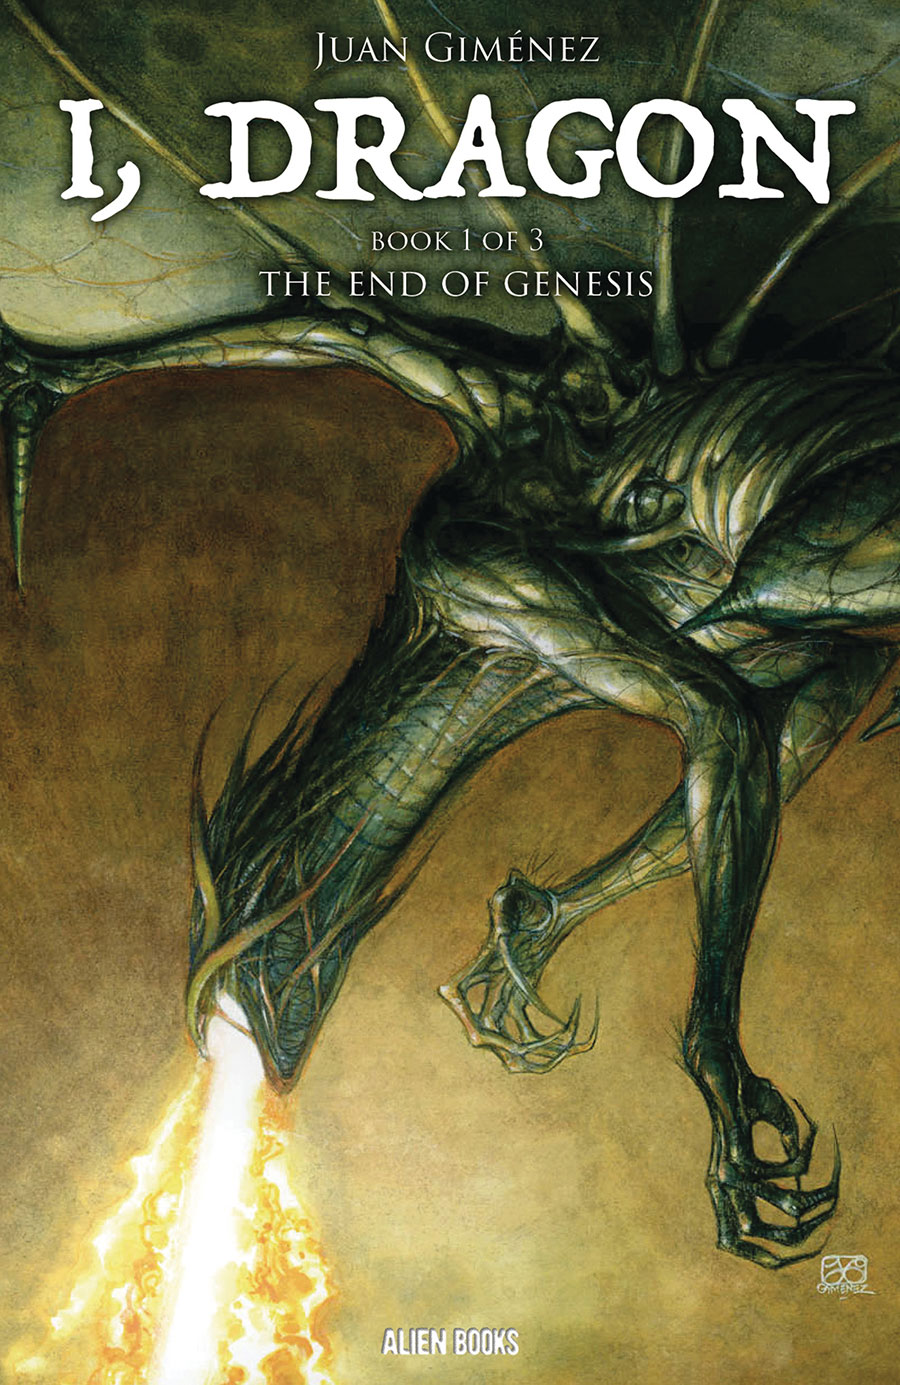 I Dragon Book 1 The End Of Genesis #1 Cover A Regular Juan Gimenez Cover